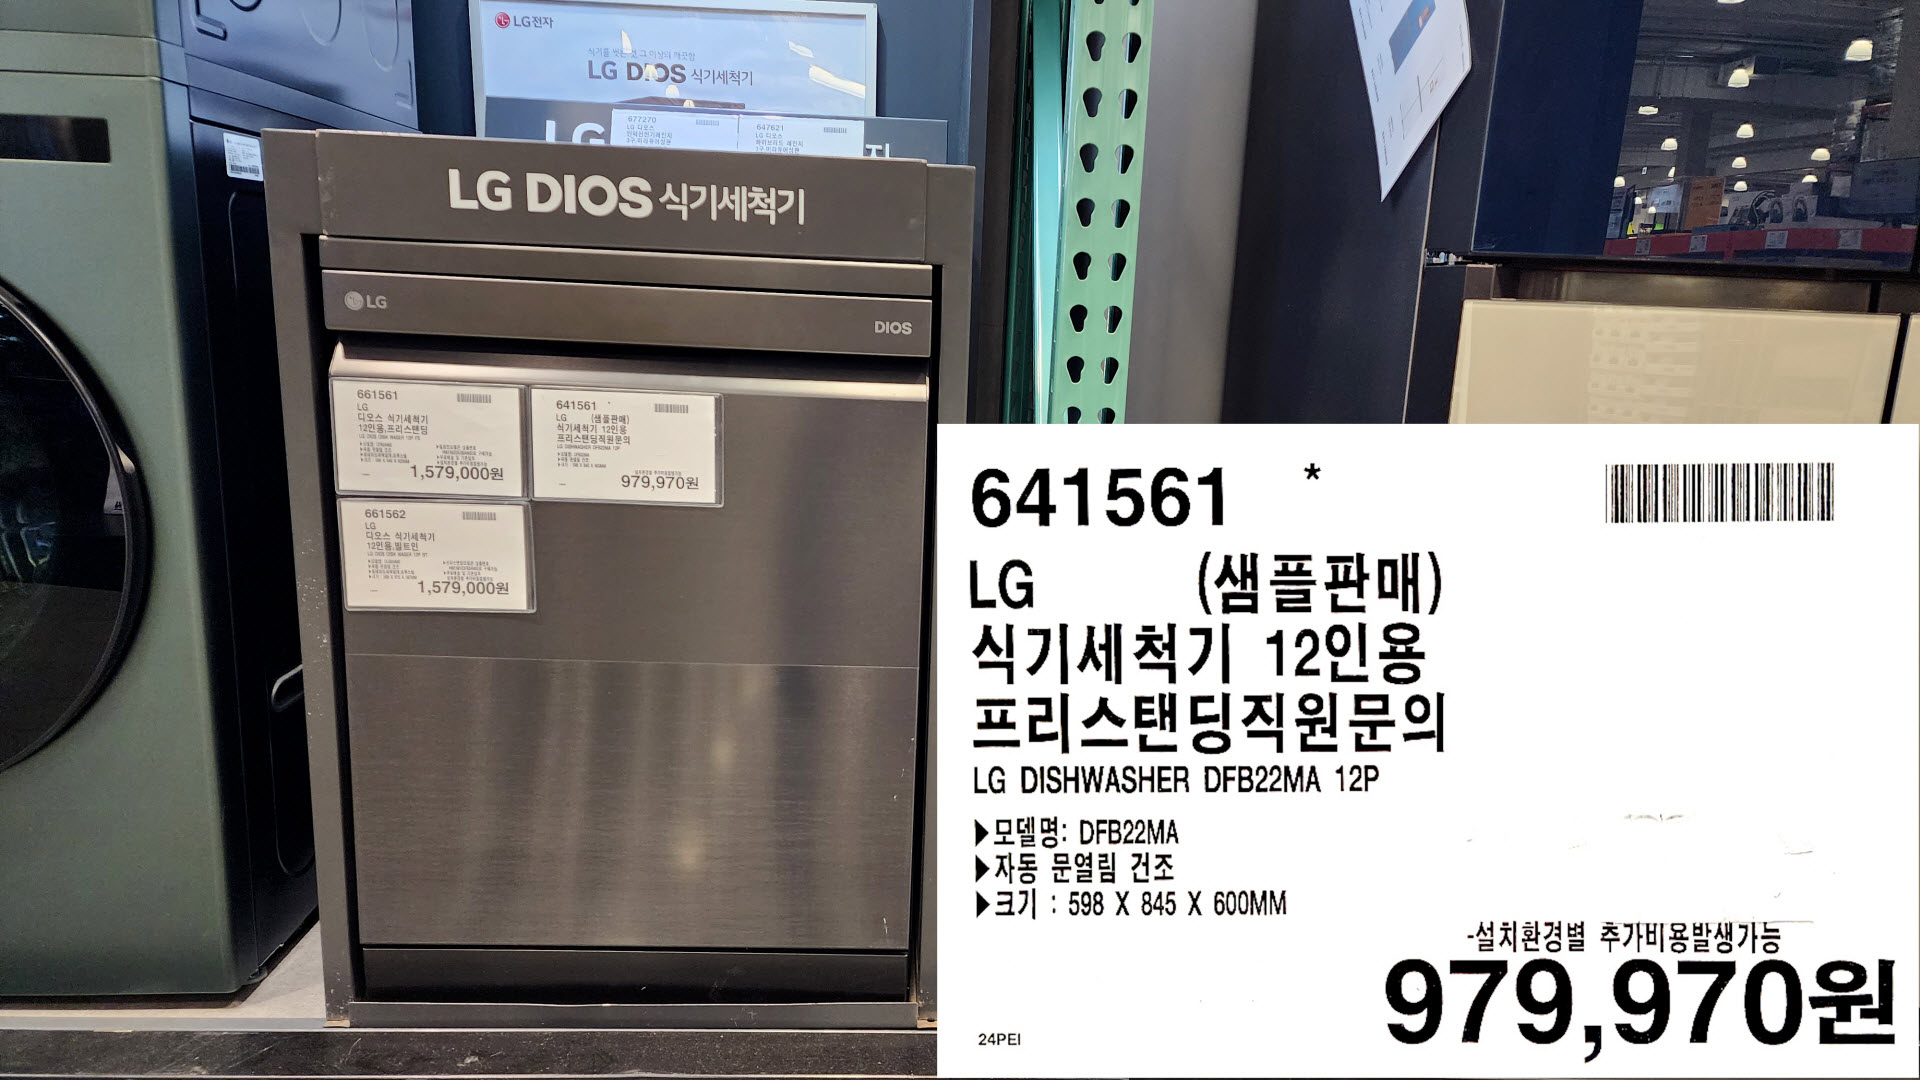 LG(샘플판매)
식기세척기 12인용
프리스탠딩직원문의
LG DISHWASHER DFB22MA 12P
모델명: DFB22MA
▶자동 문열림 건조
▶크기 : 598 X 845 X 600MM
-설치환경별 추가비용발생가능
979&#44;970원